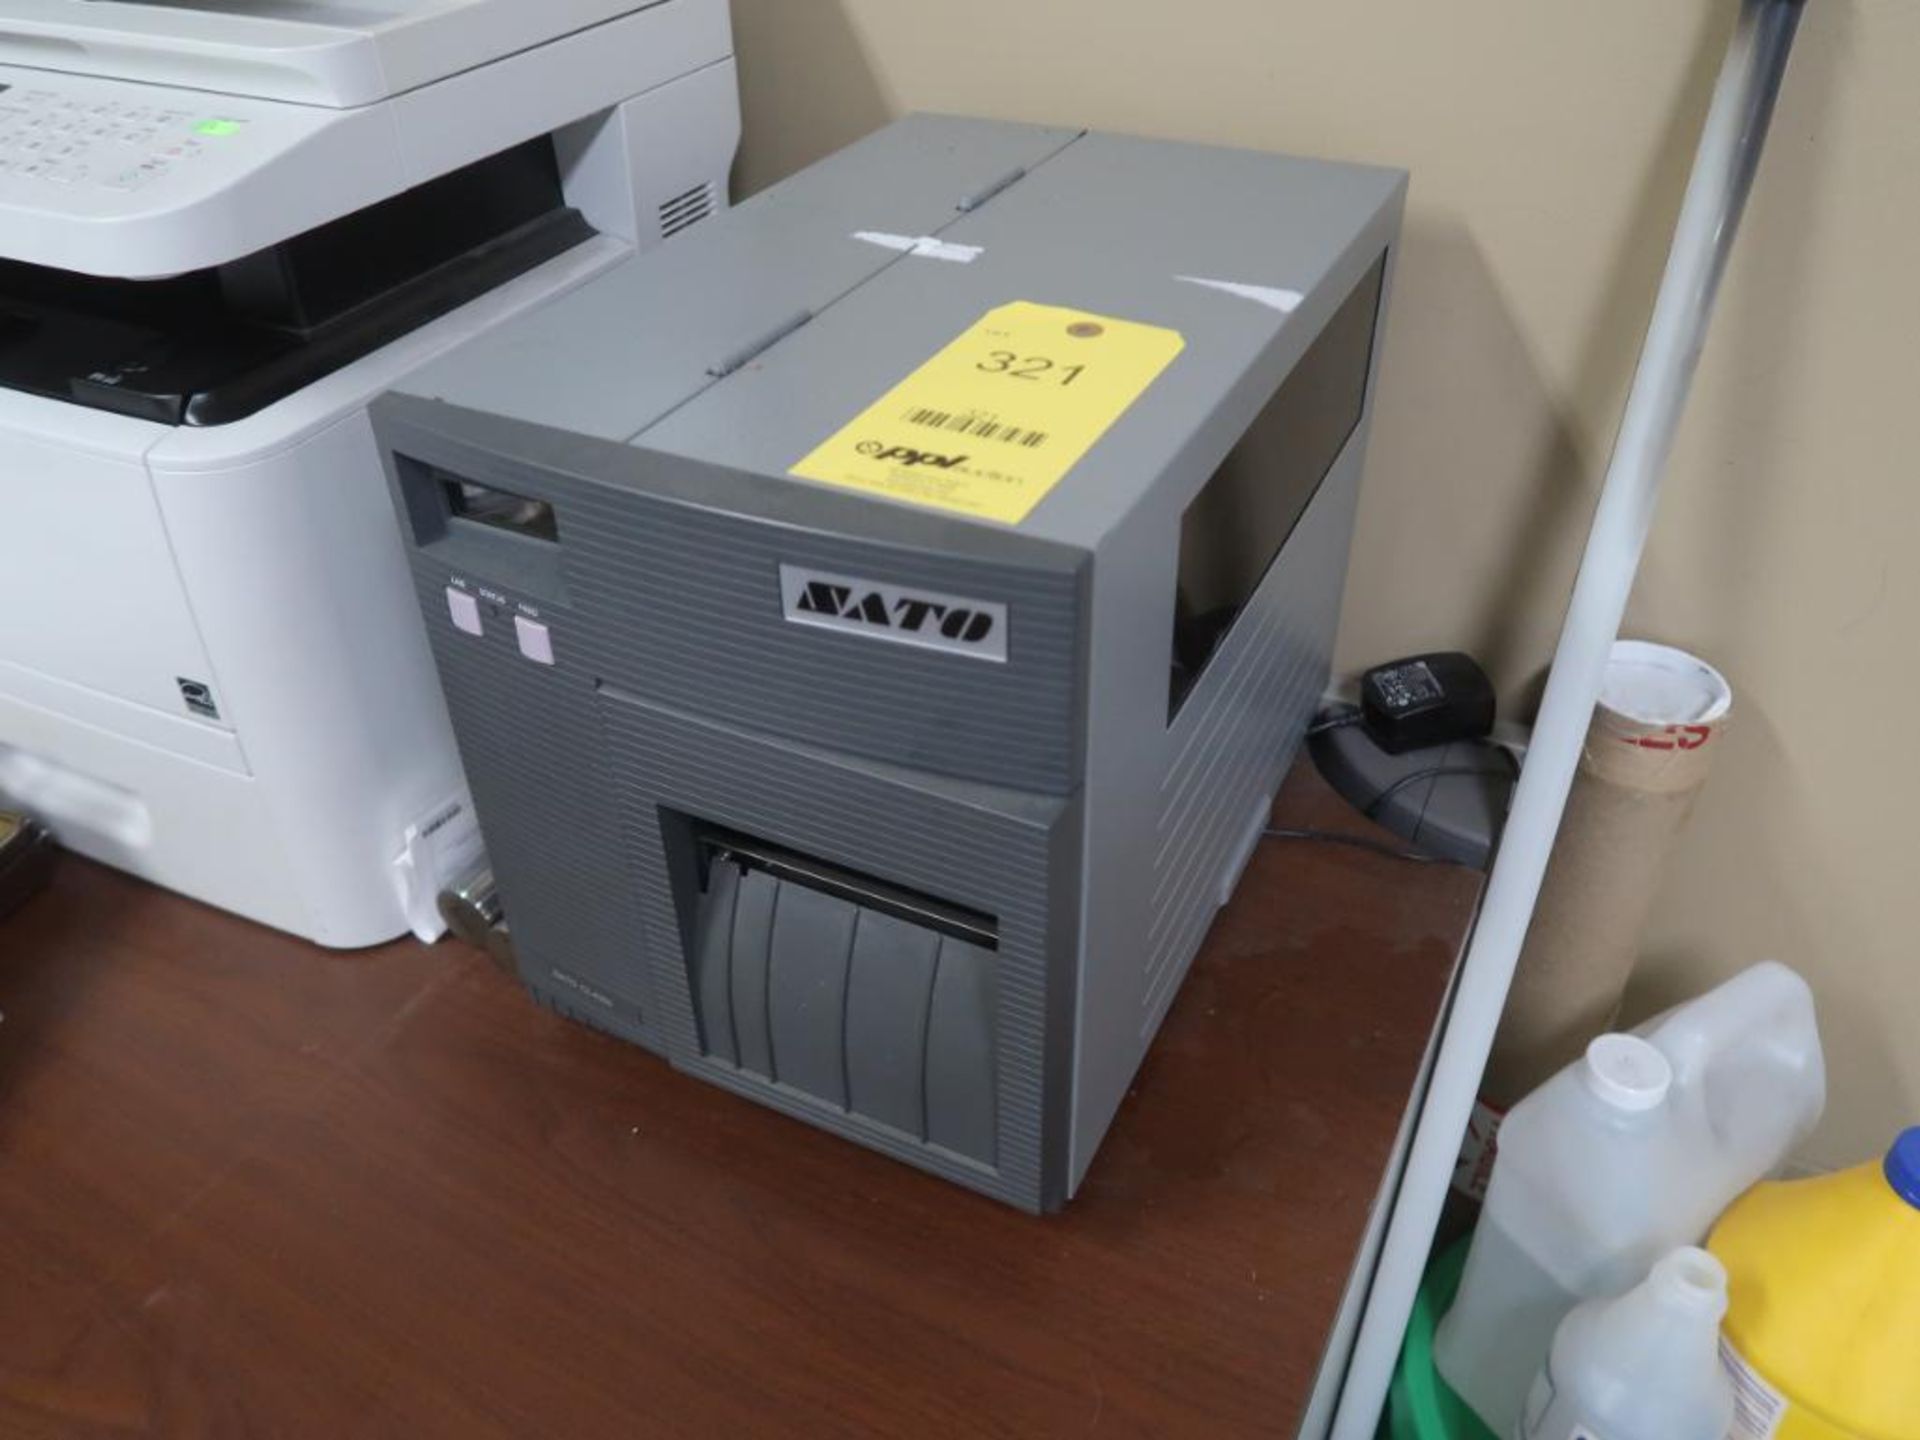 Sato CL408E Label Printer (LOCATED IN PLANT OFFICE) (LOCATION: 39 PEARCE INDUSTRIAL RD.,